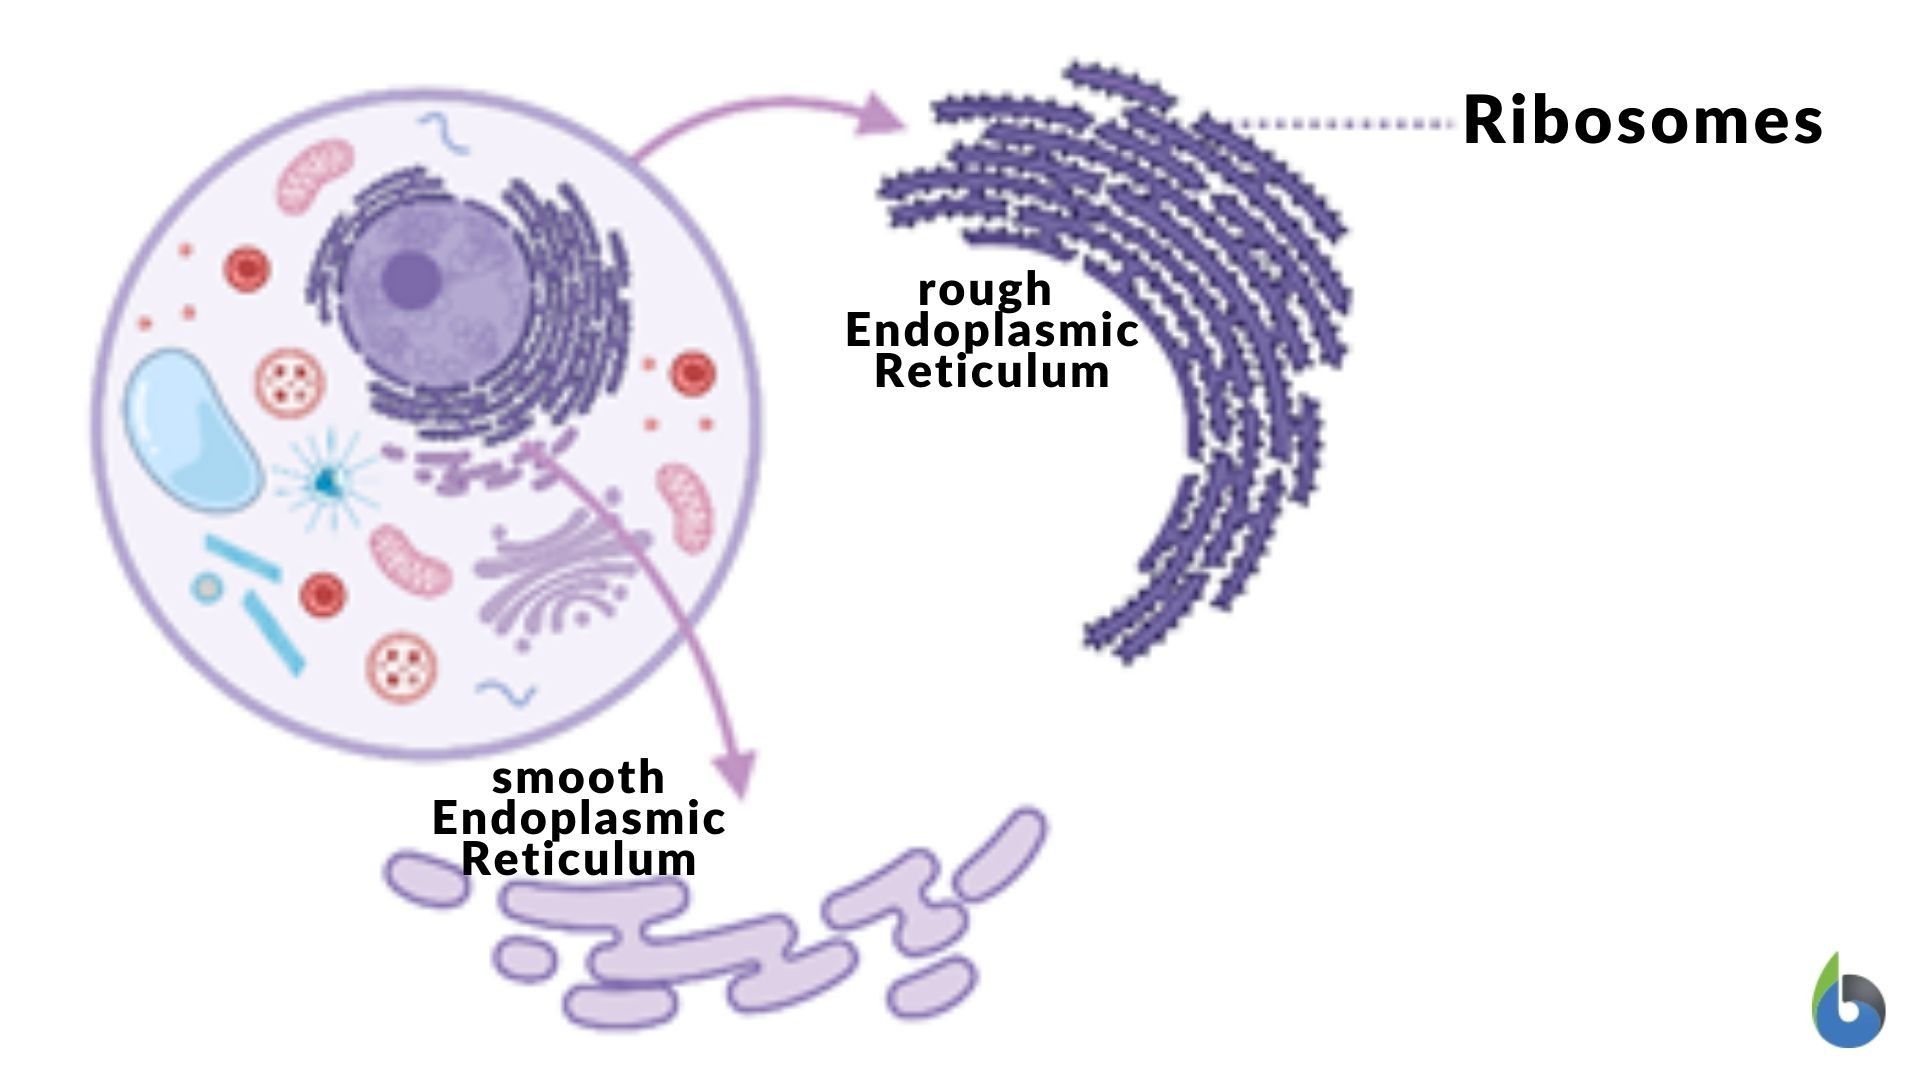 Figure 2: Rough and Smooth endoplasmic reticulum (ER) (Image sources: Dr Amita Joshi)